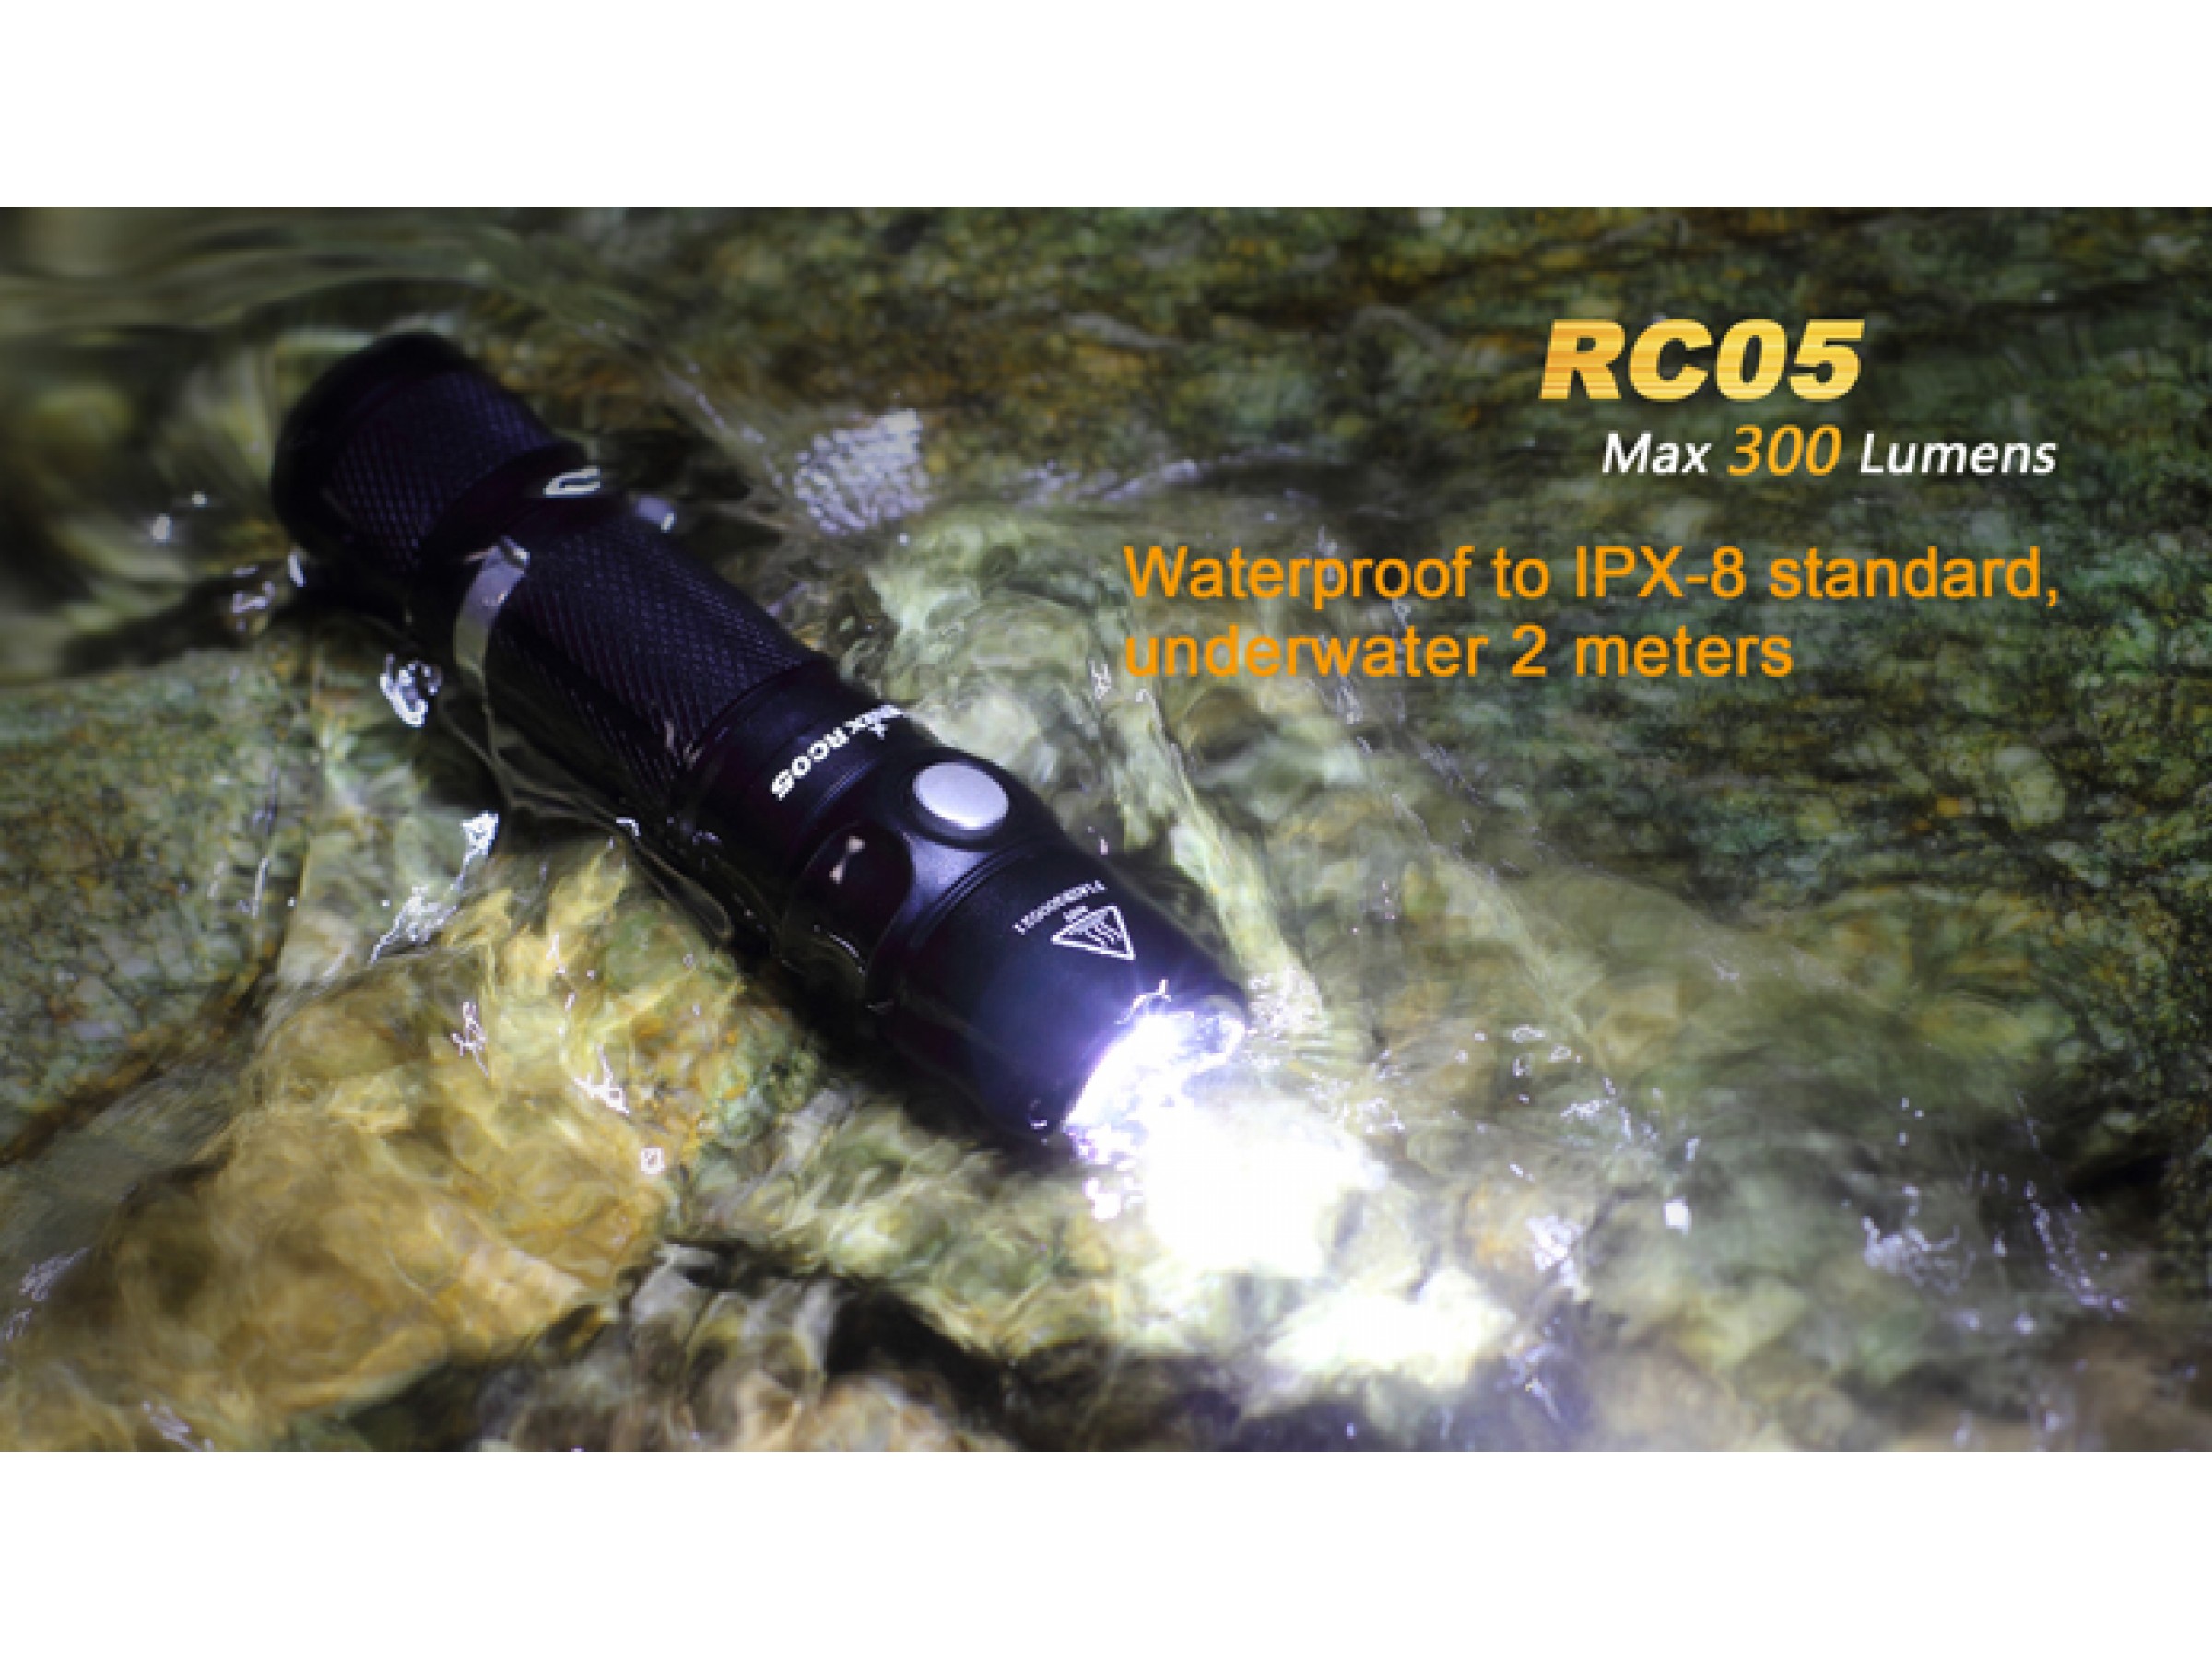 Fenix RC05 flashlight